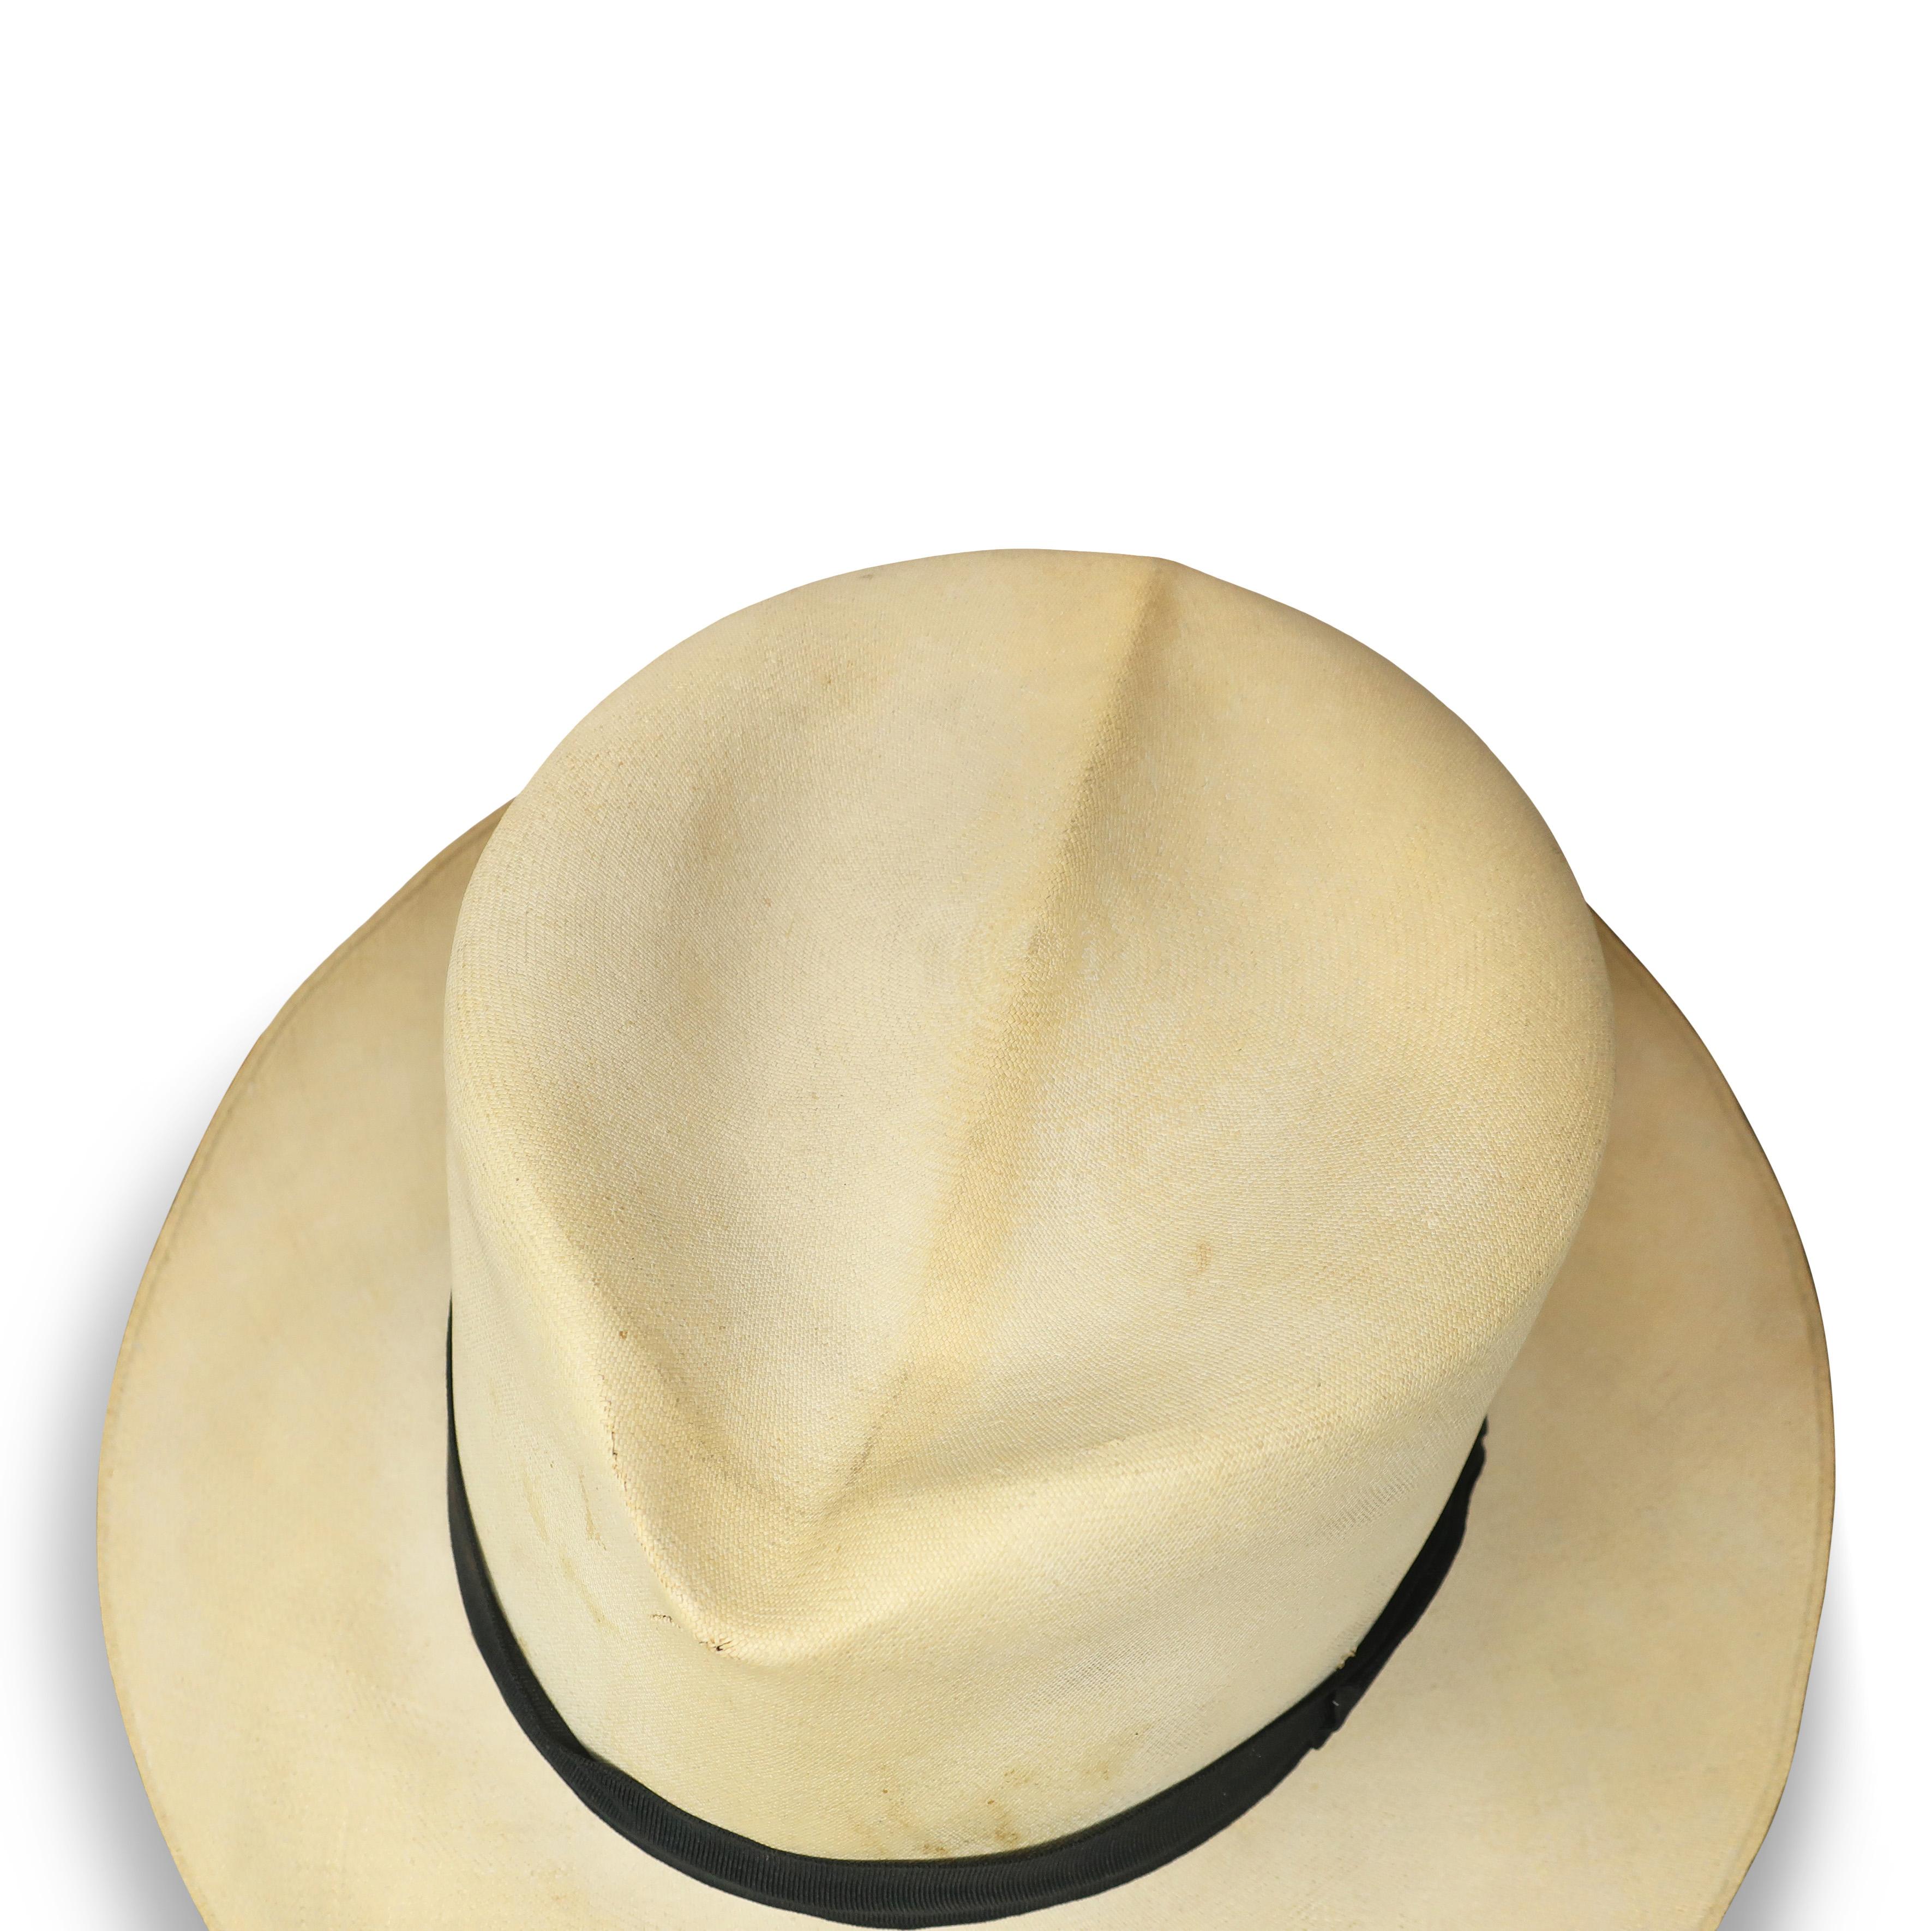 Fabric Vintage 1930s Panama Hat by John Cavanagh, Ltd. in Original Box